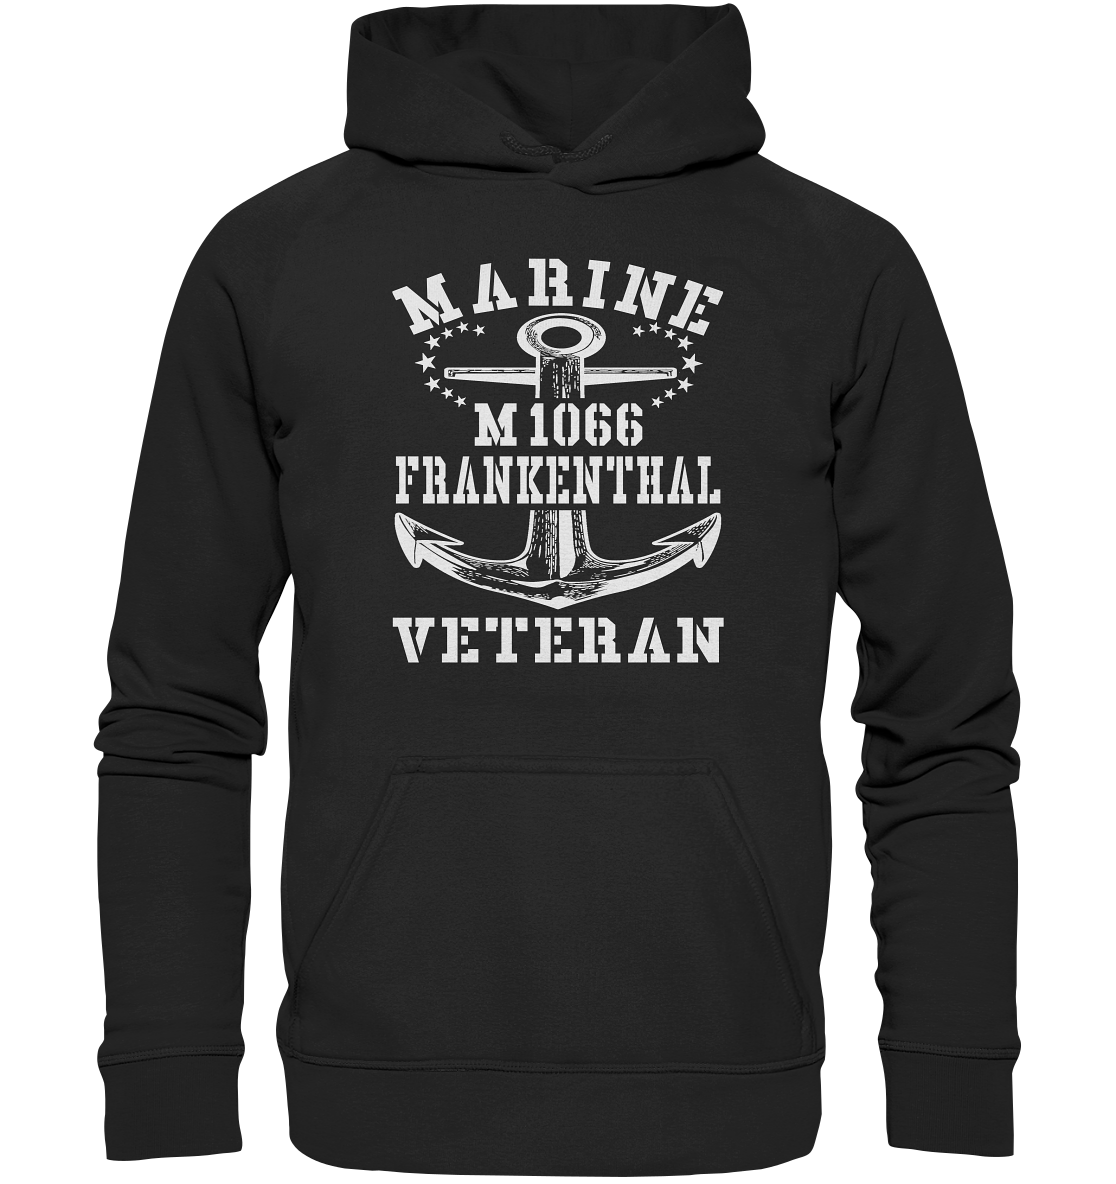 Mij.-Boot M1066 FRANKENTHAL Marine Veteran - Basic Unisex Hoodie XL